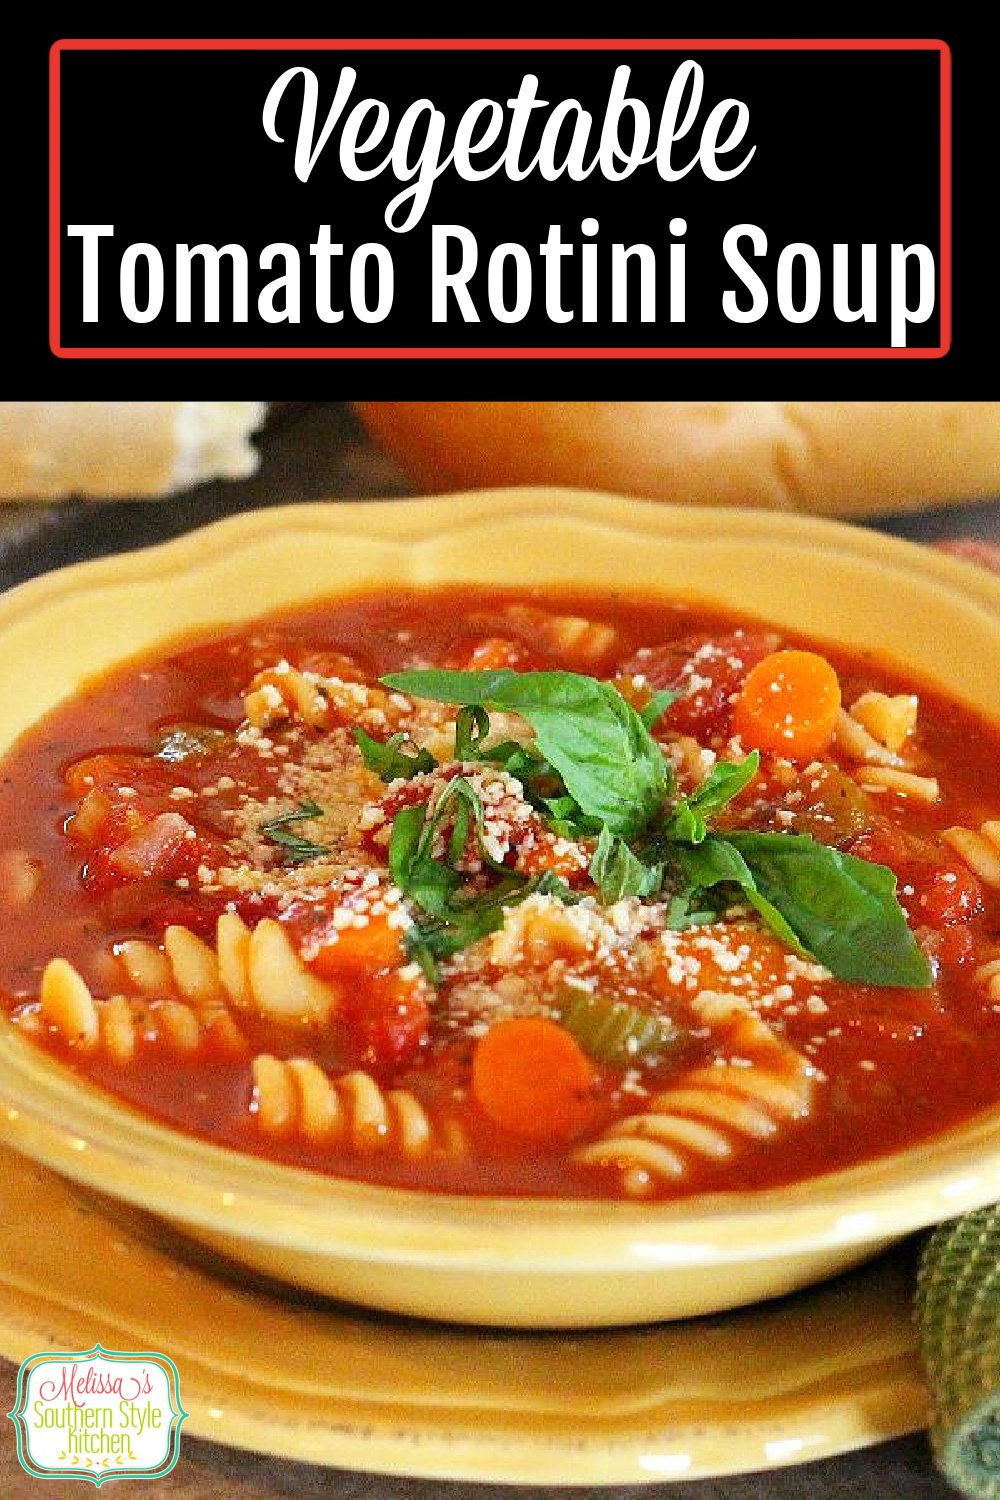 tomato-rotini-soup-pin via @melissasssk